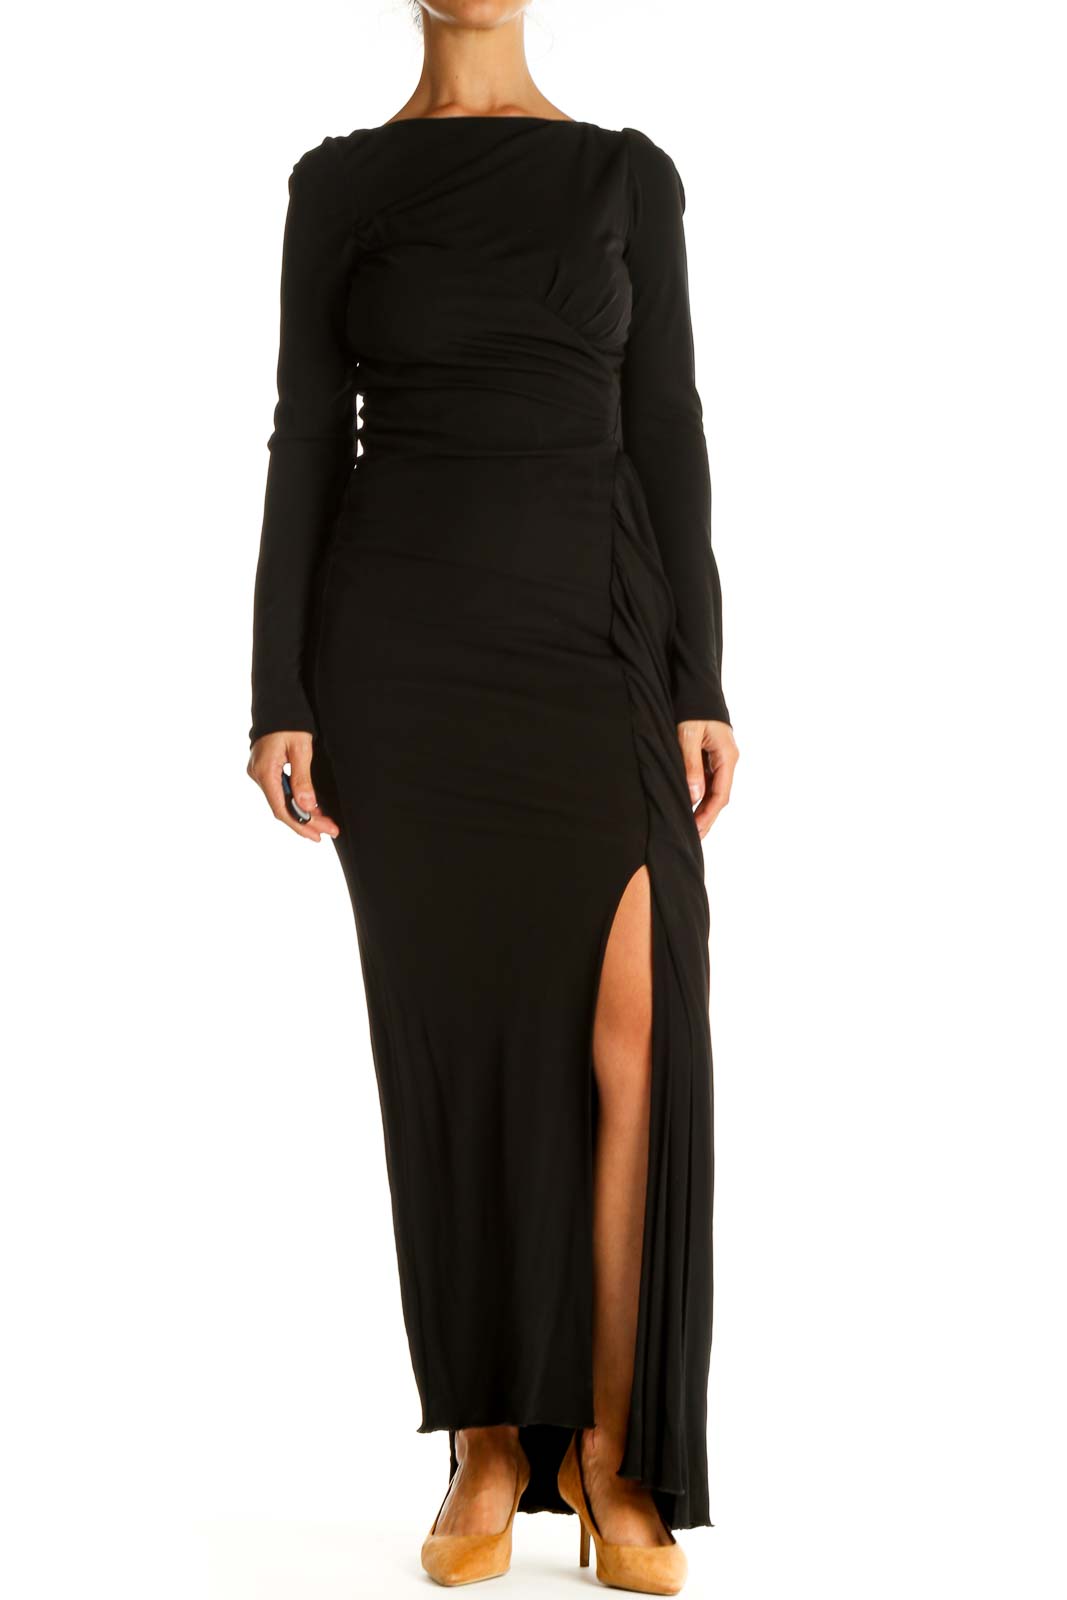 Black Solid Classic Column Dress Front